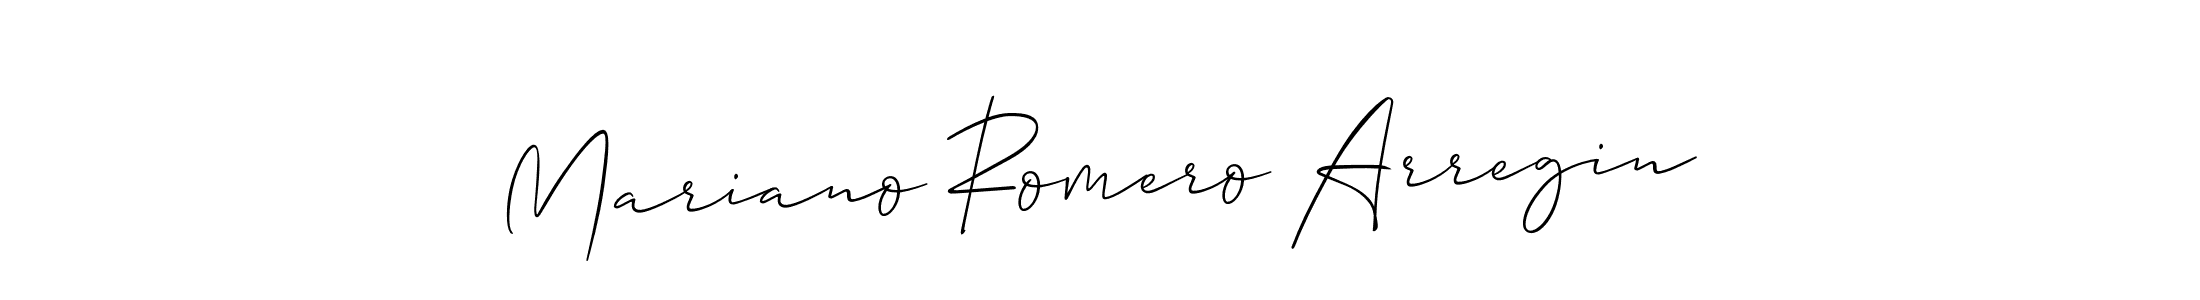 How to Draw Mariano Romero Arregin signature style? Allison_Script is a latest design signature styles for name Mariano Romero Arregin. Mariano Romero Arregin signature style 2 images and pictures png